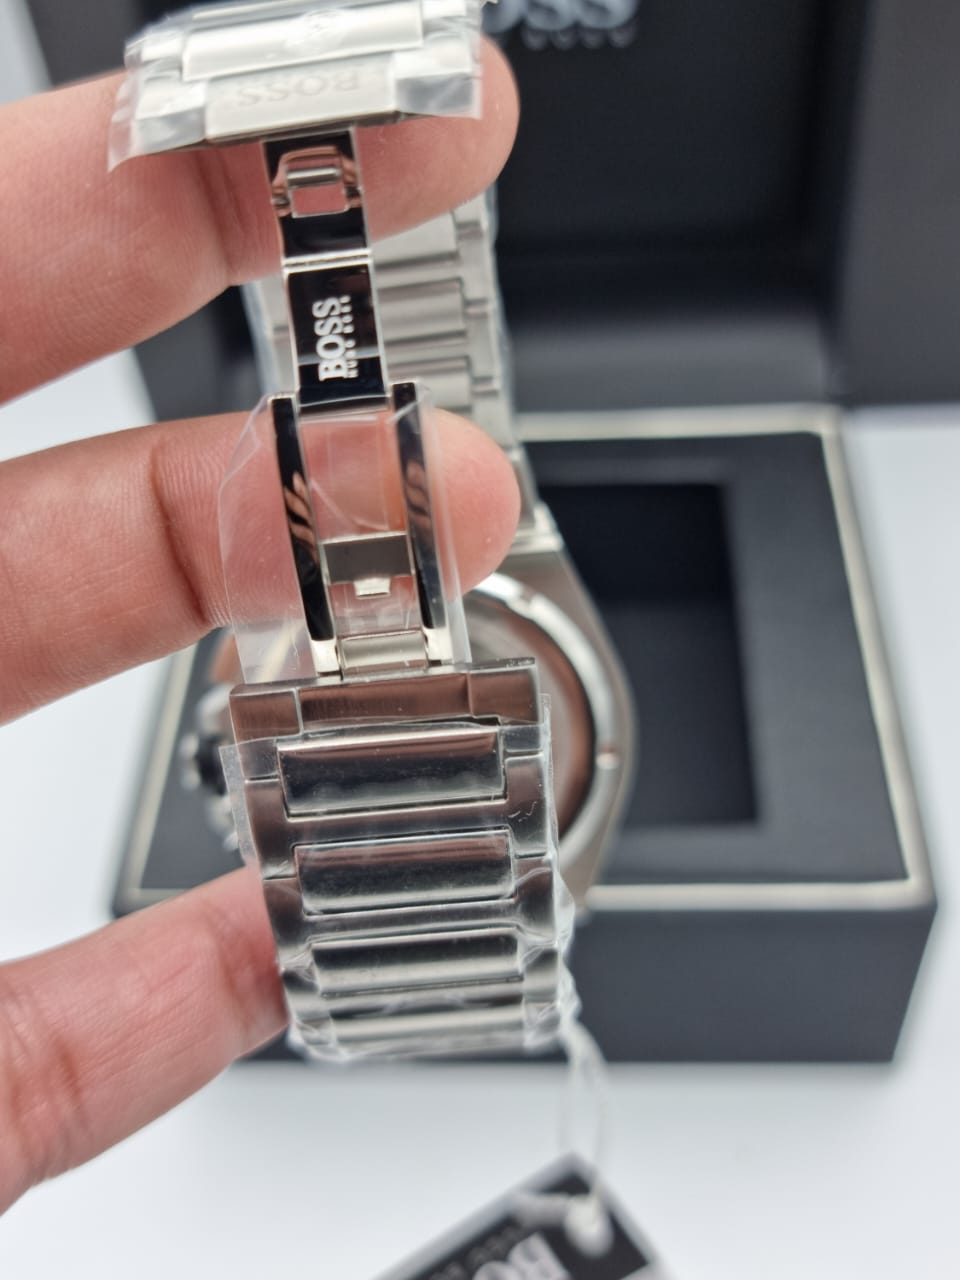 Hugo Boss Chronograph Men’s Stainless Steel Blue Dial 46mm Watch 1513360